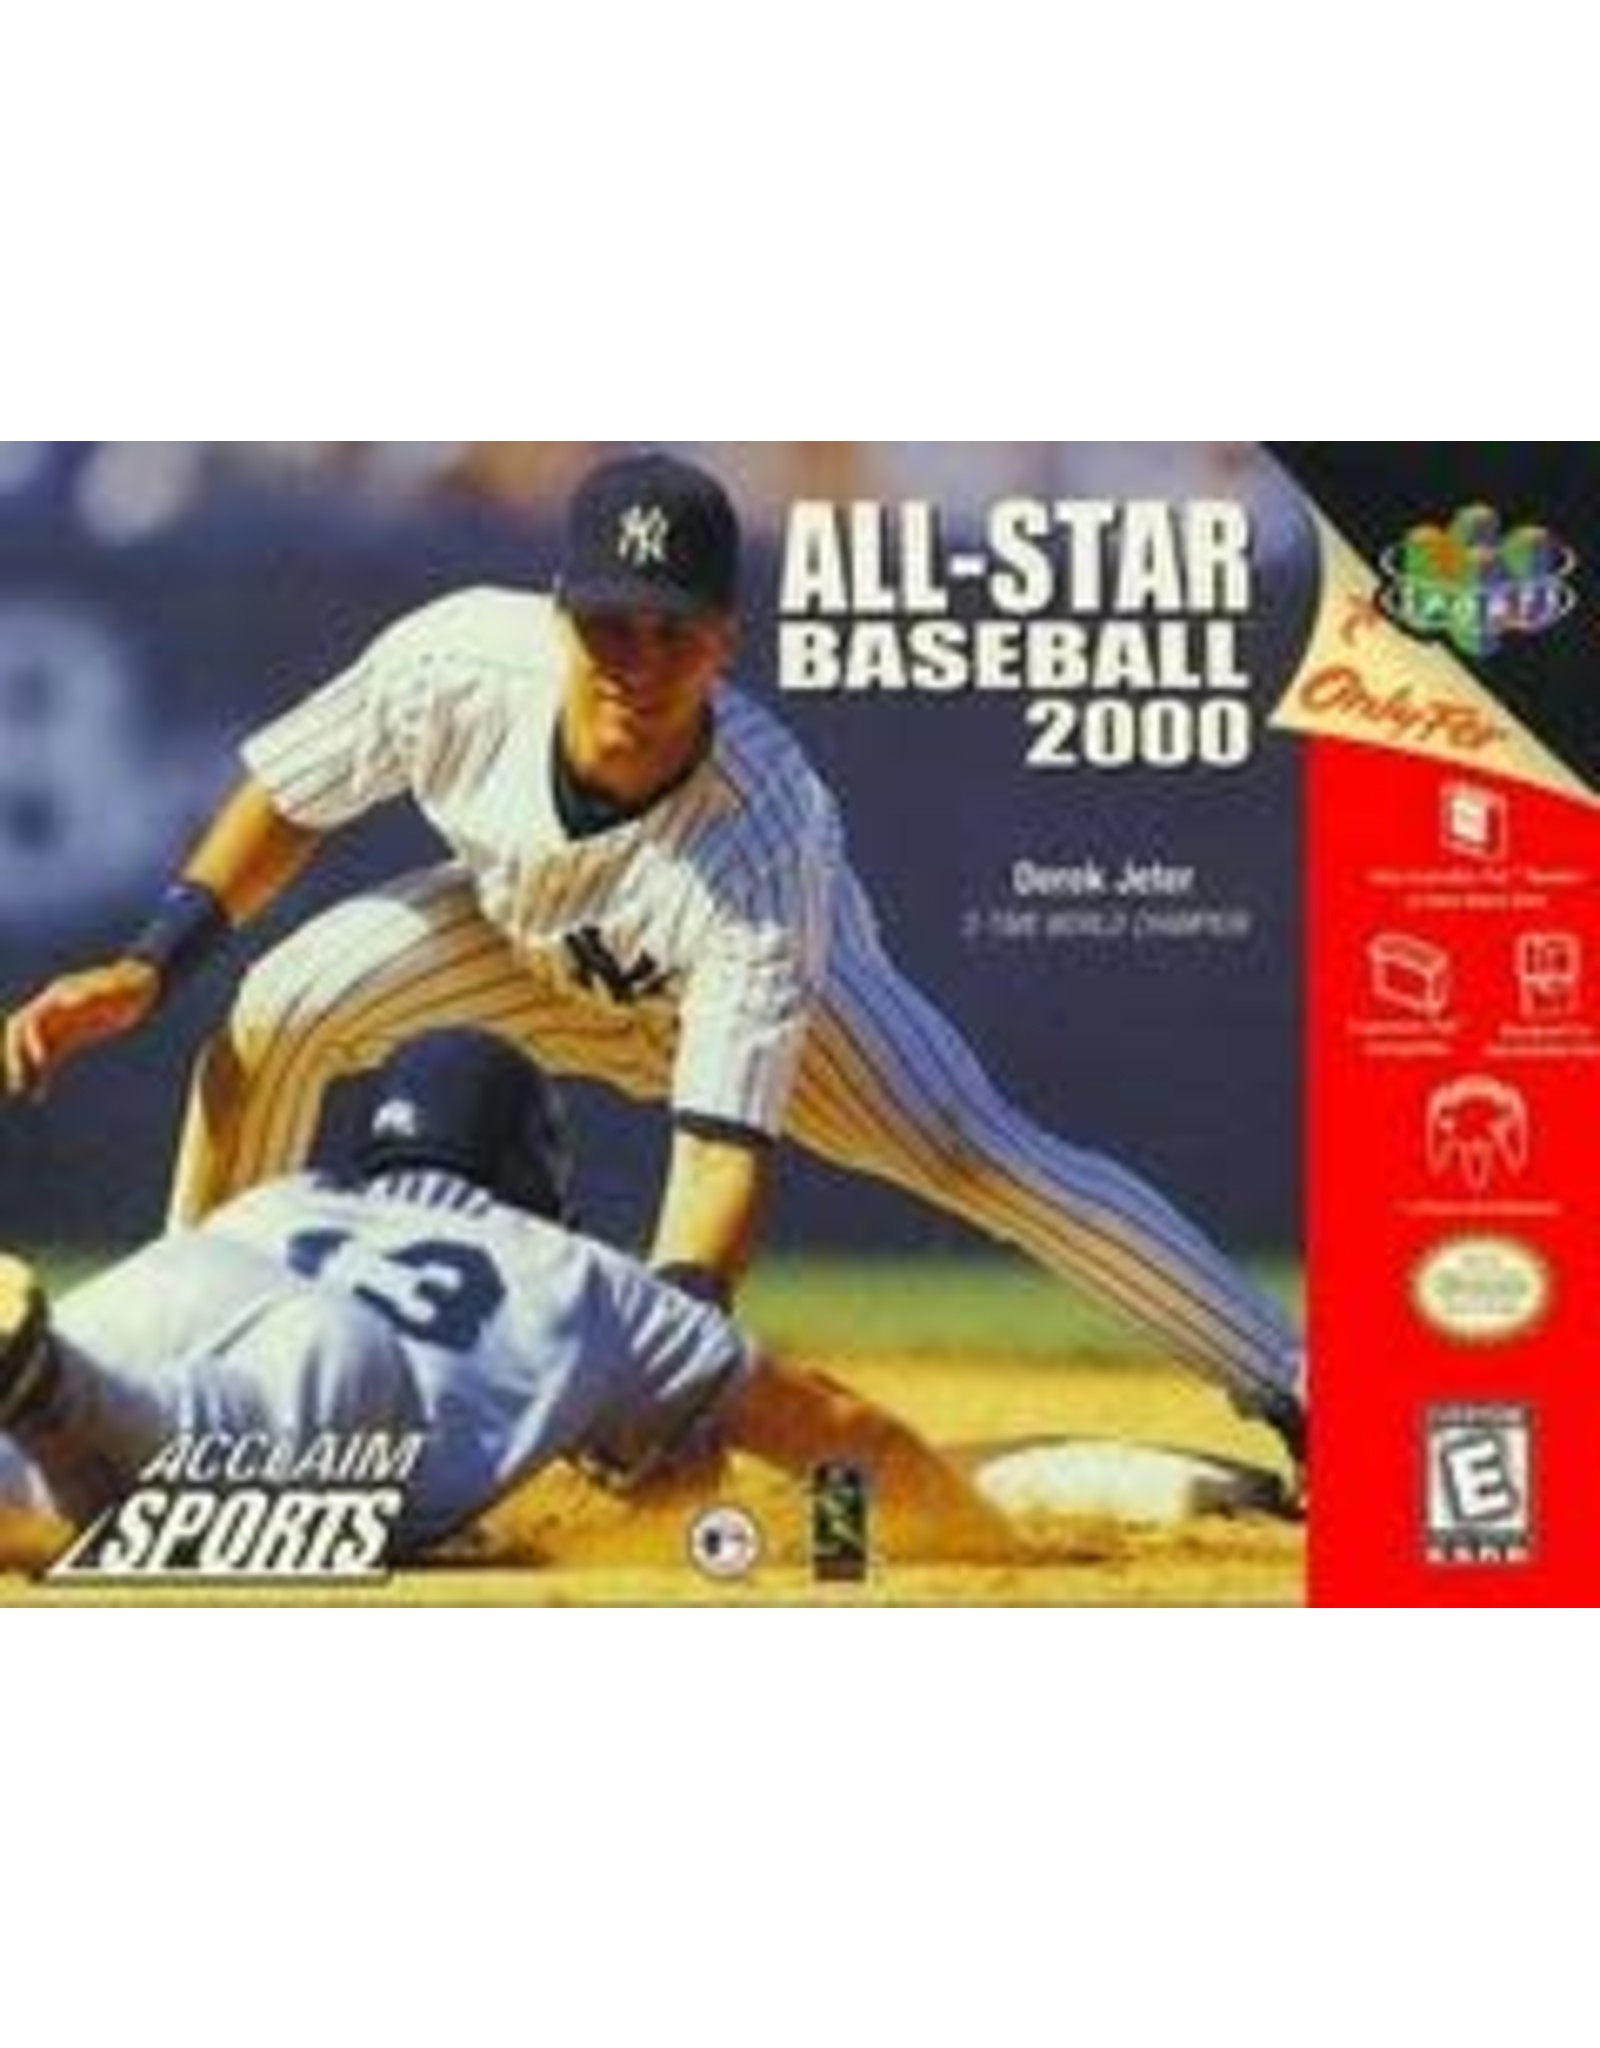 Nintendo 64 All-Star Baseball 2000 (Cart Only, Damaged Back Label)